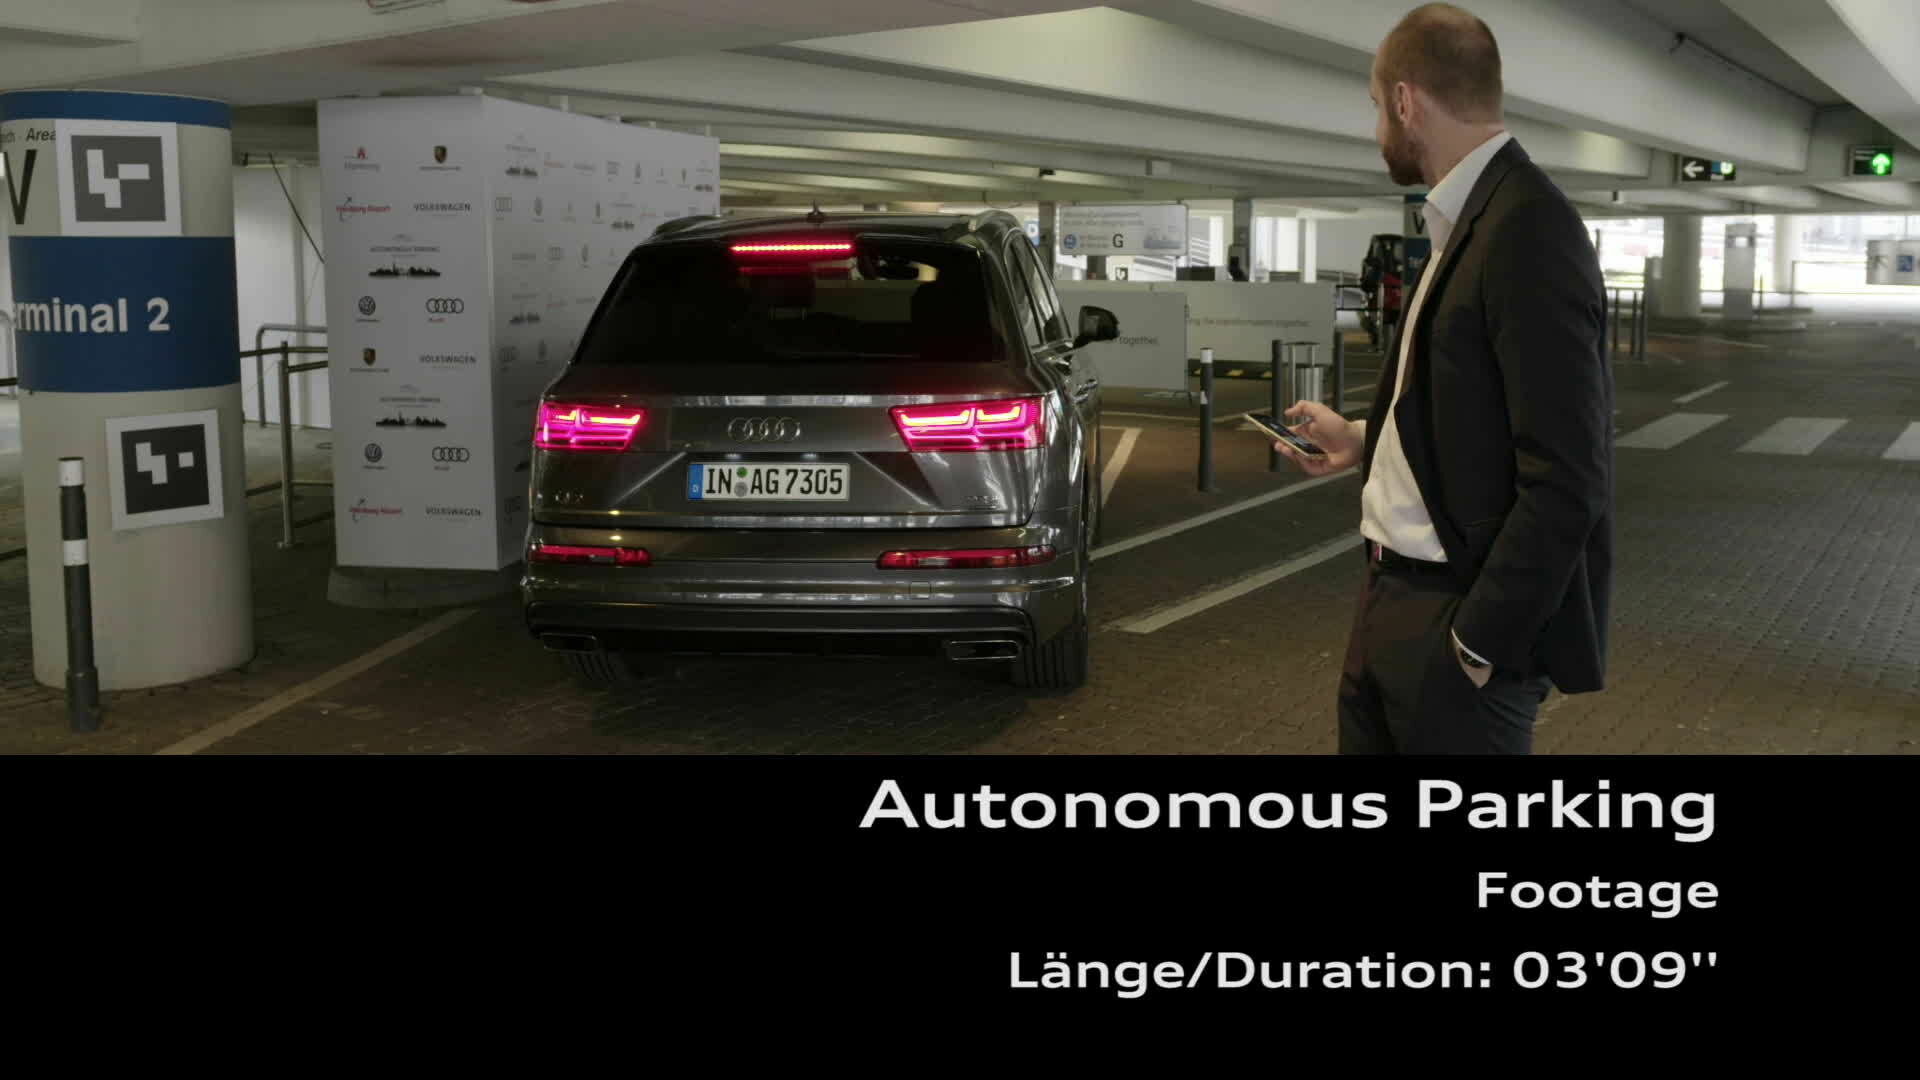 Footage: Autonomous parking at Hamburg Airport